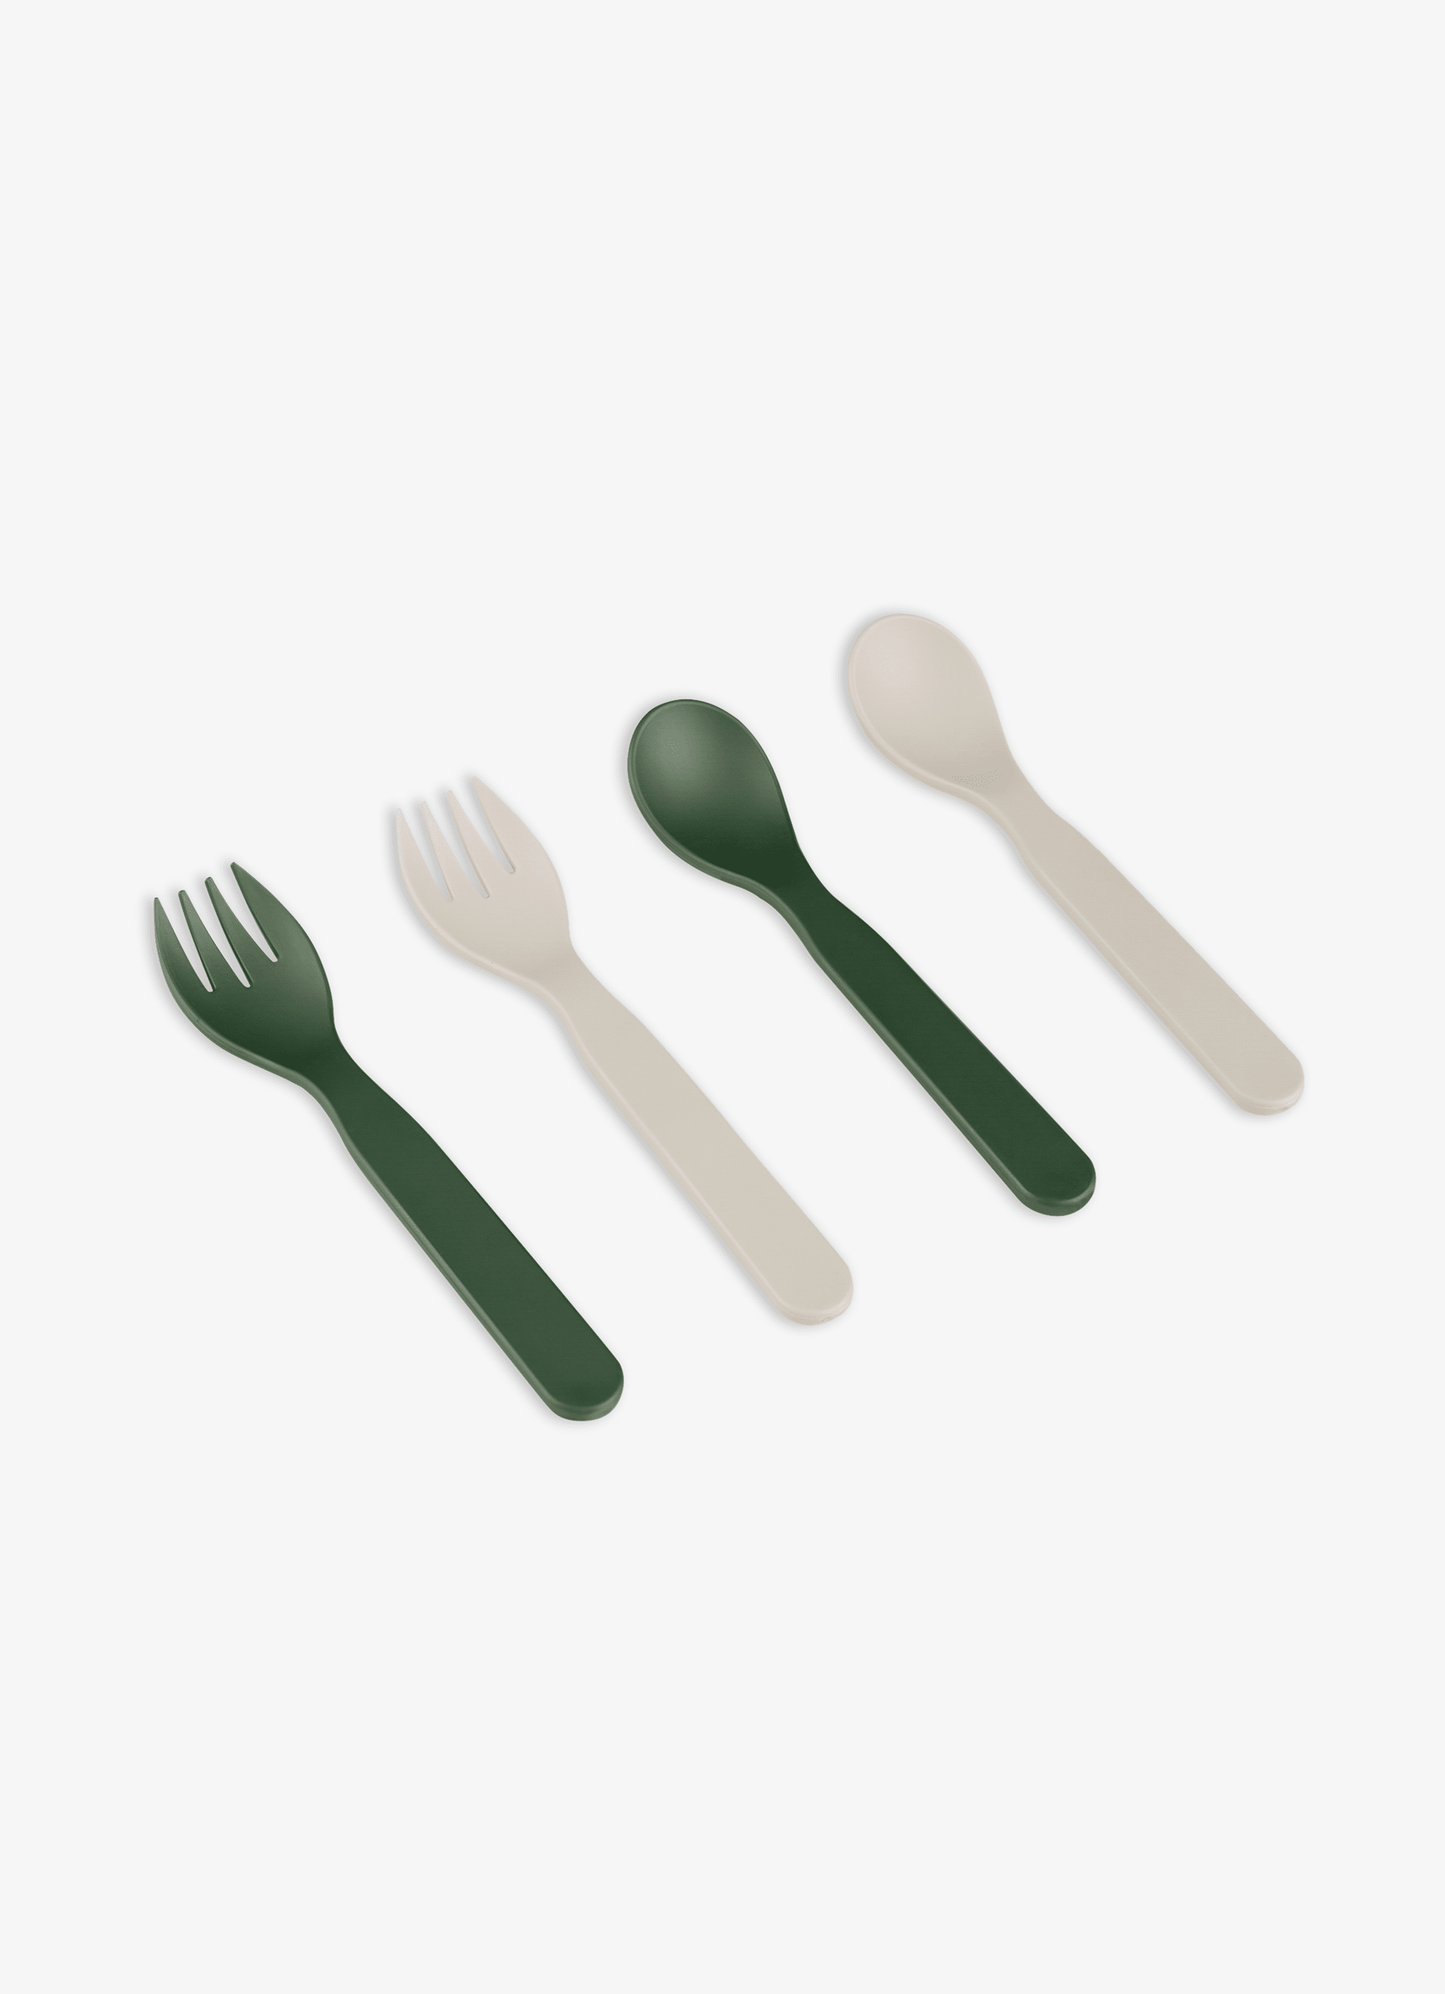 Bio-Based Cutlery - set of 5 - Green/ Cream + Case